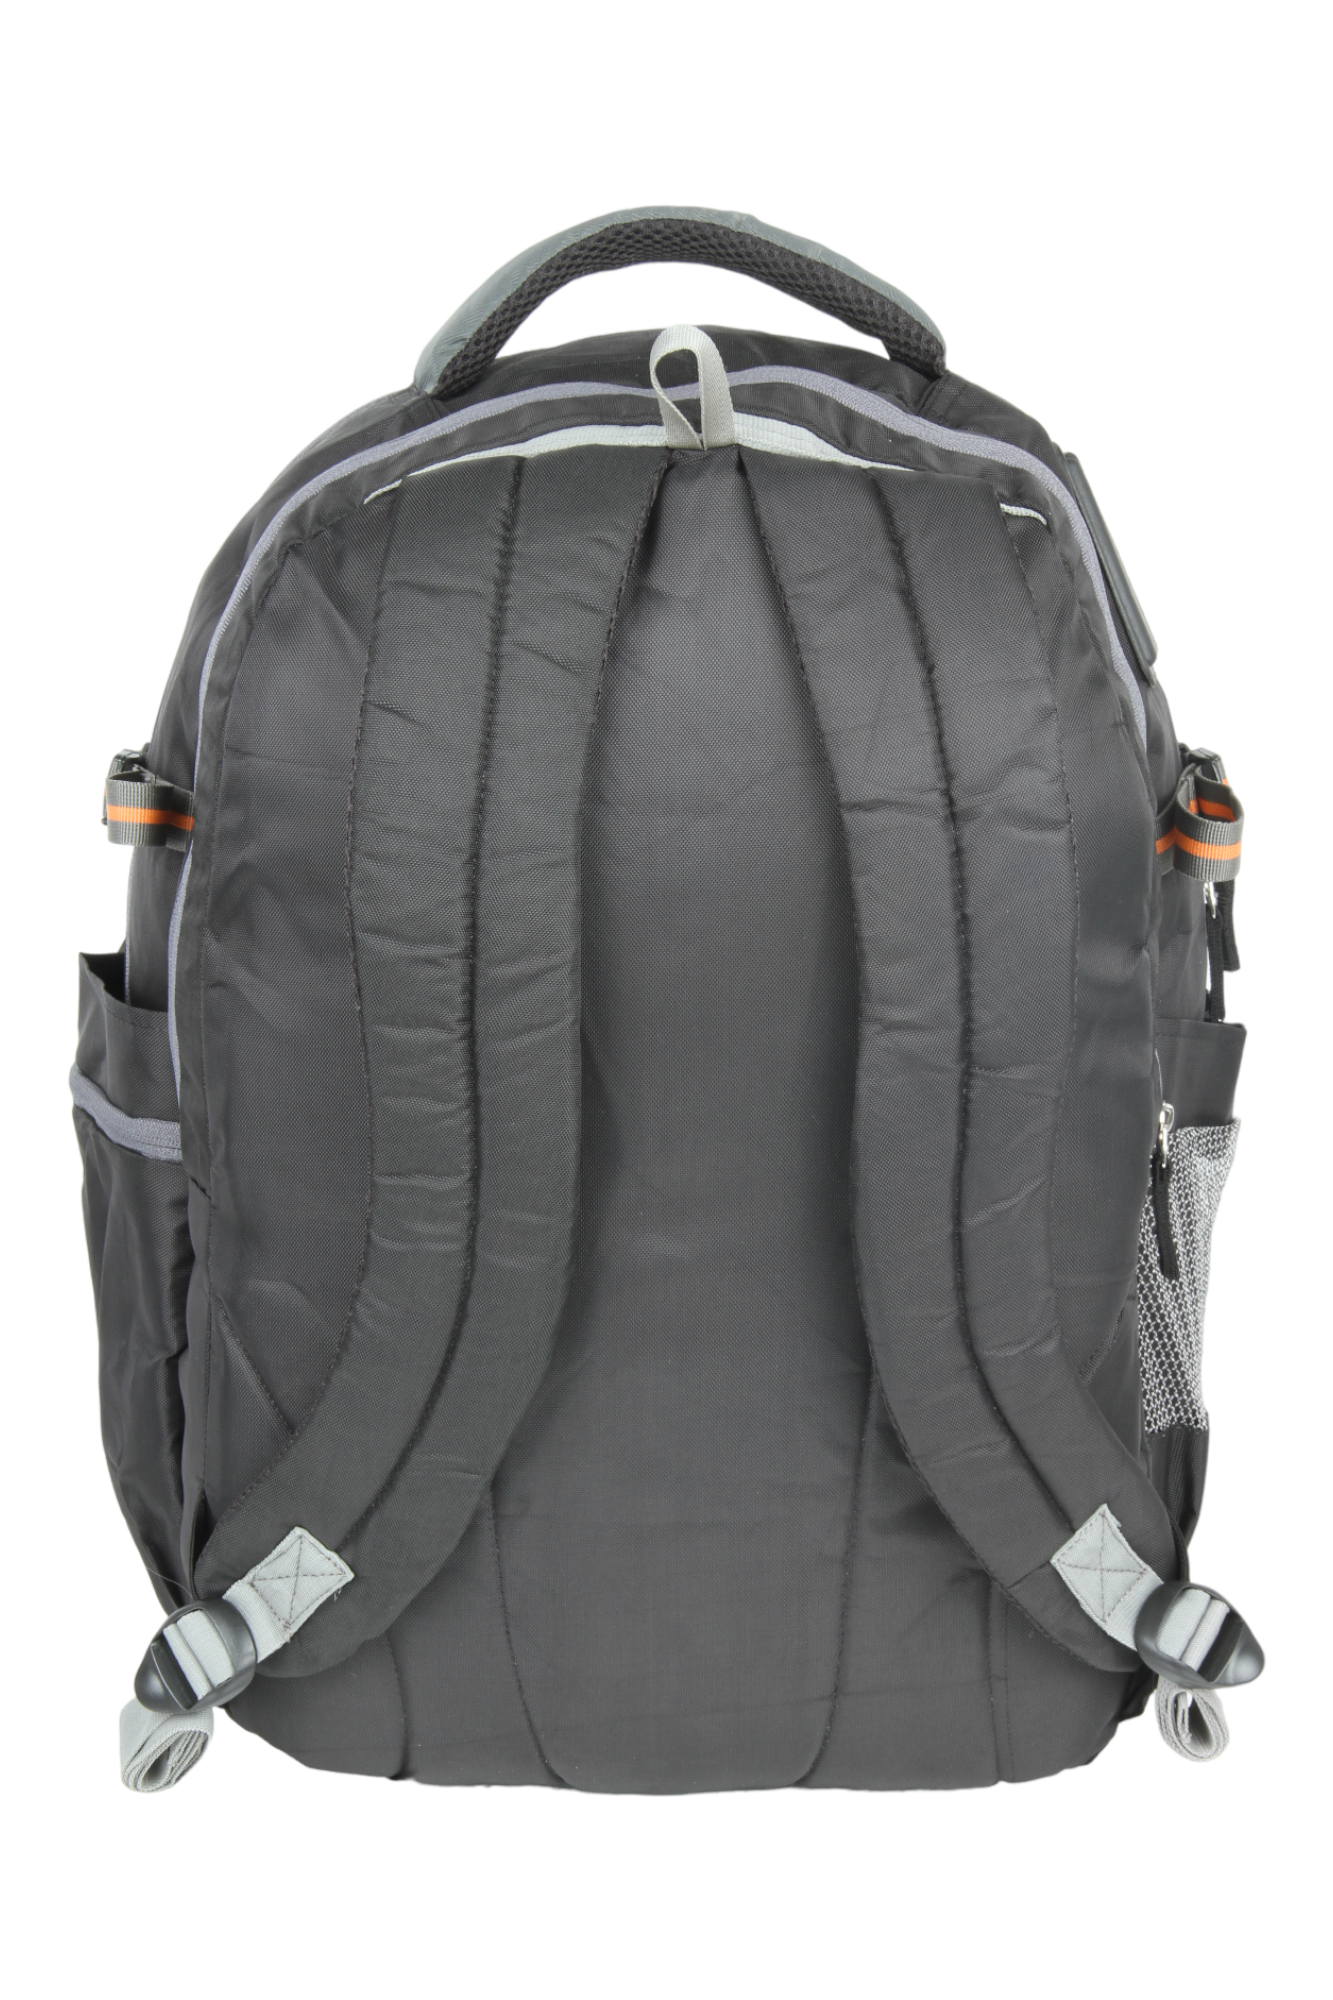 Backpack (Black) 19515 – Sreeleathers Ltd